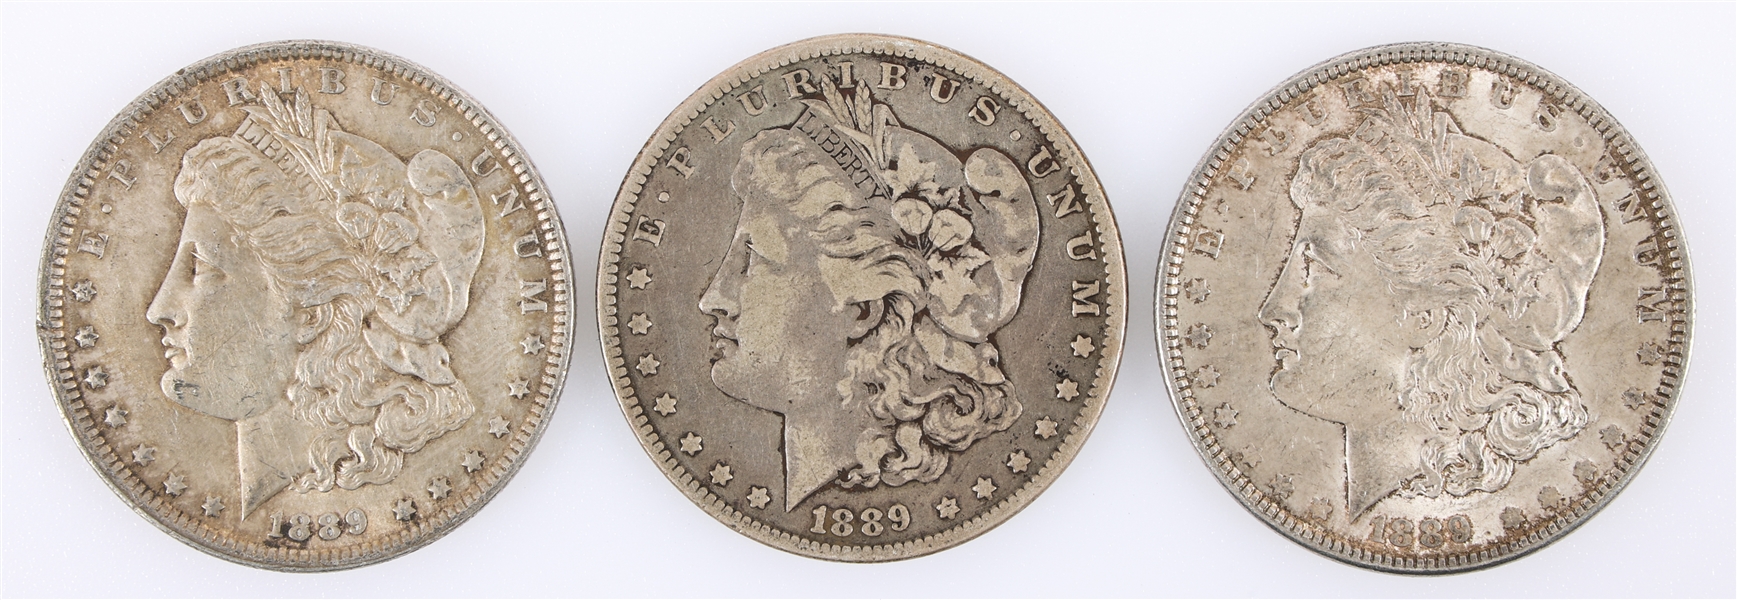 1889-P US MORGAN SILVER DOLLAR COINS - LOT OF 3